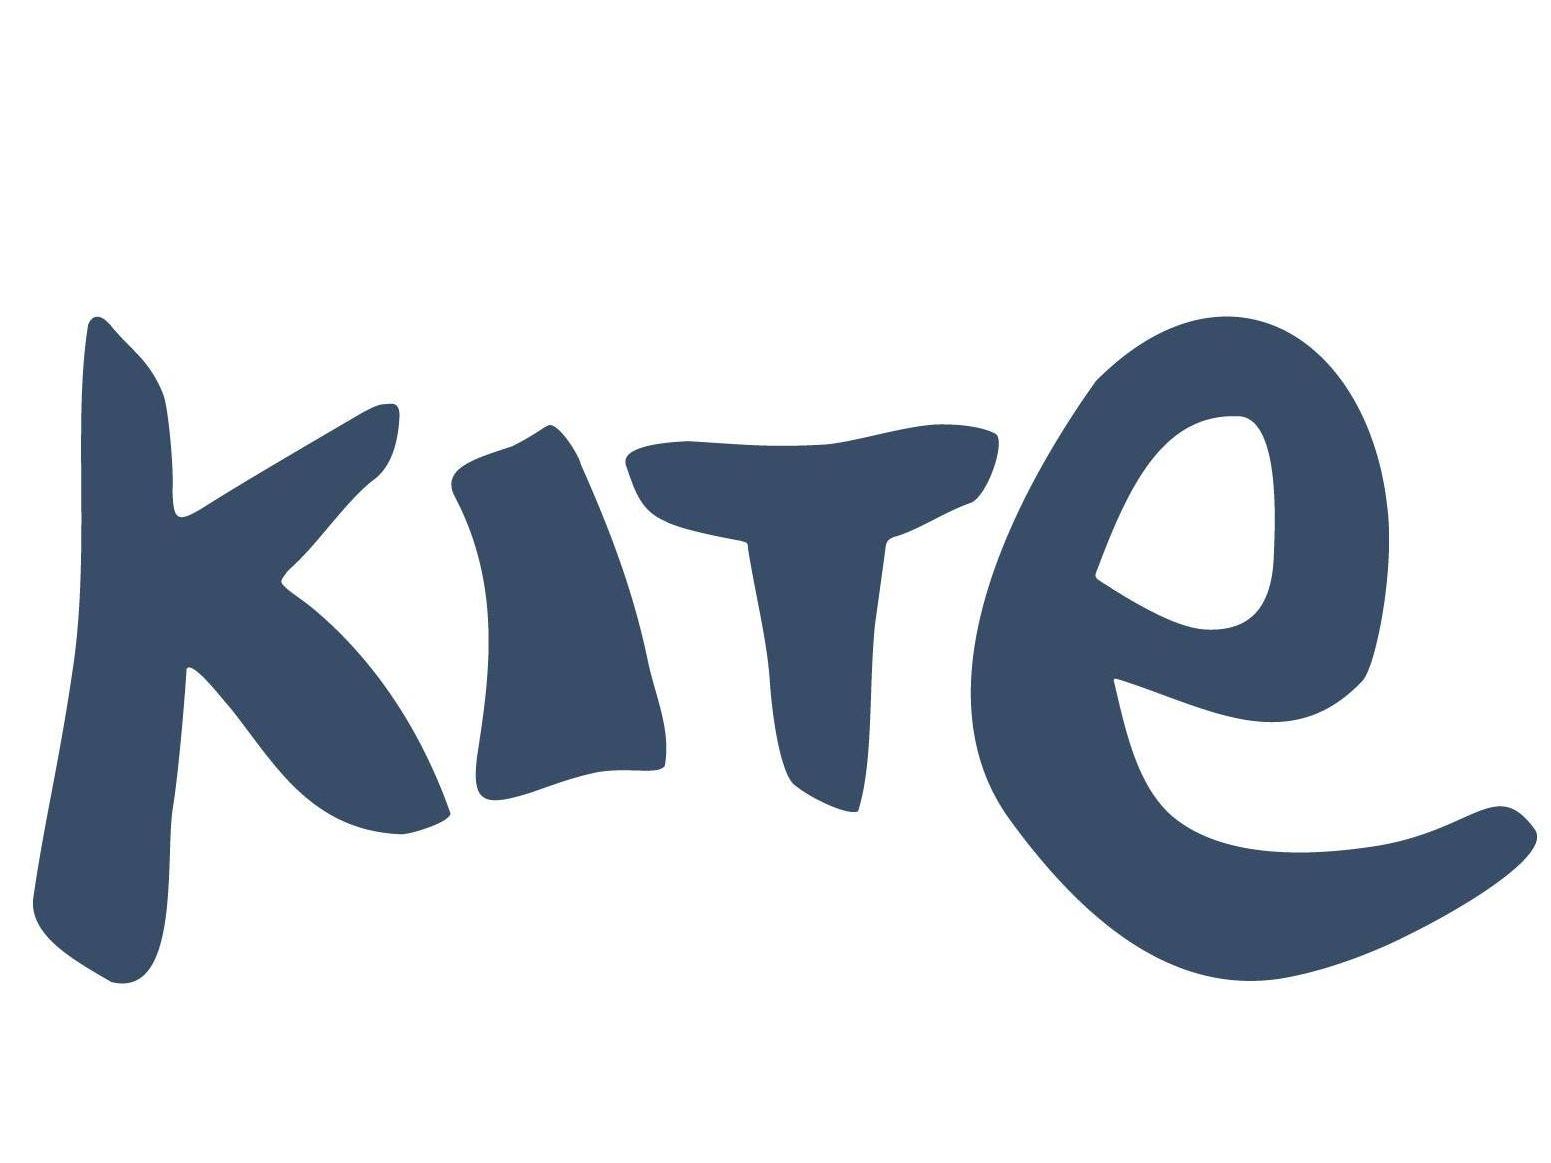 Kite Clothing brand logo